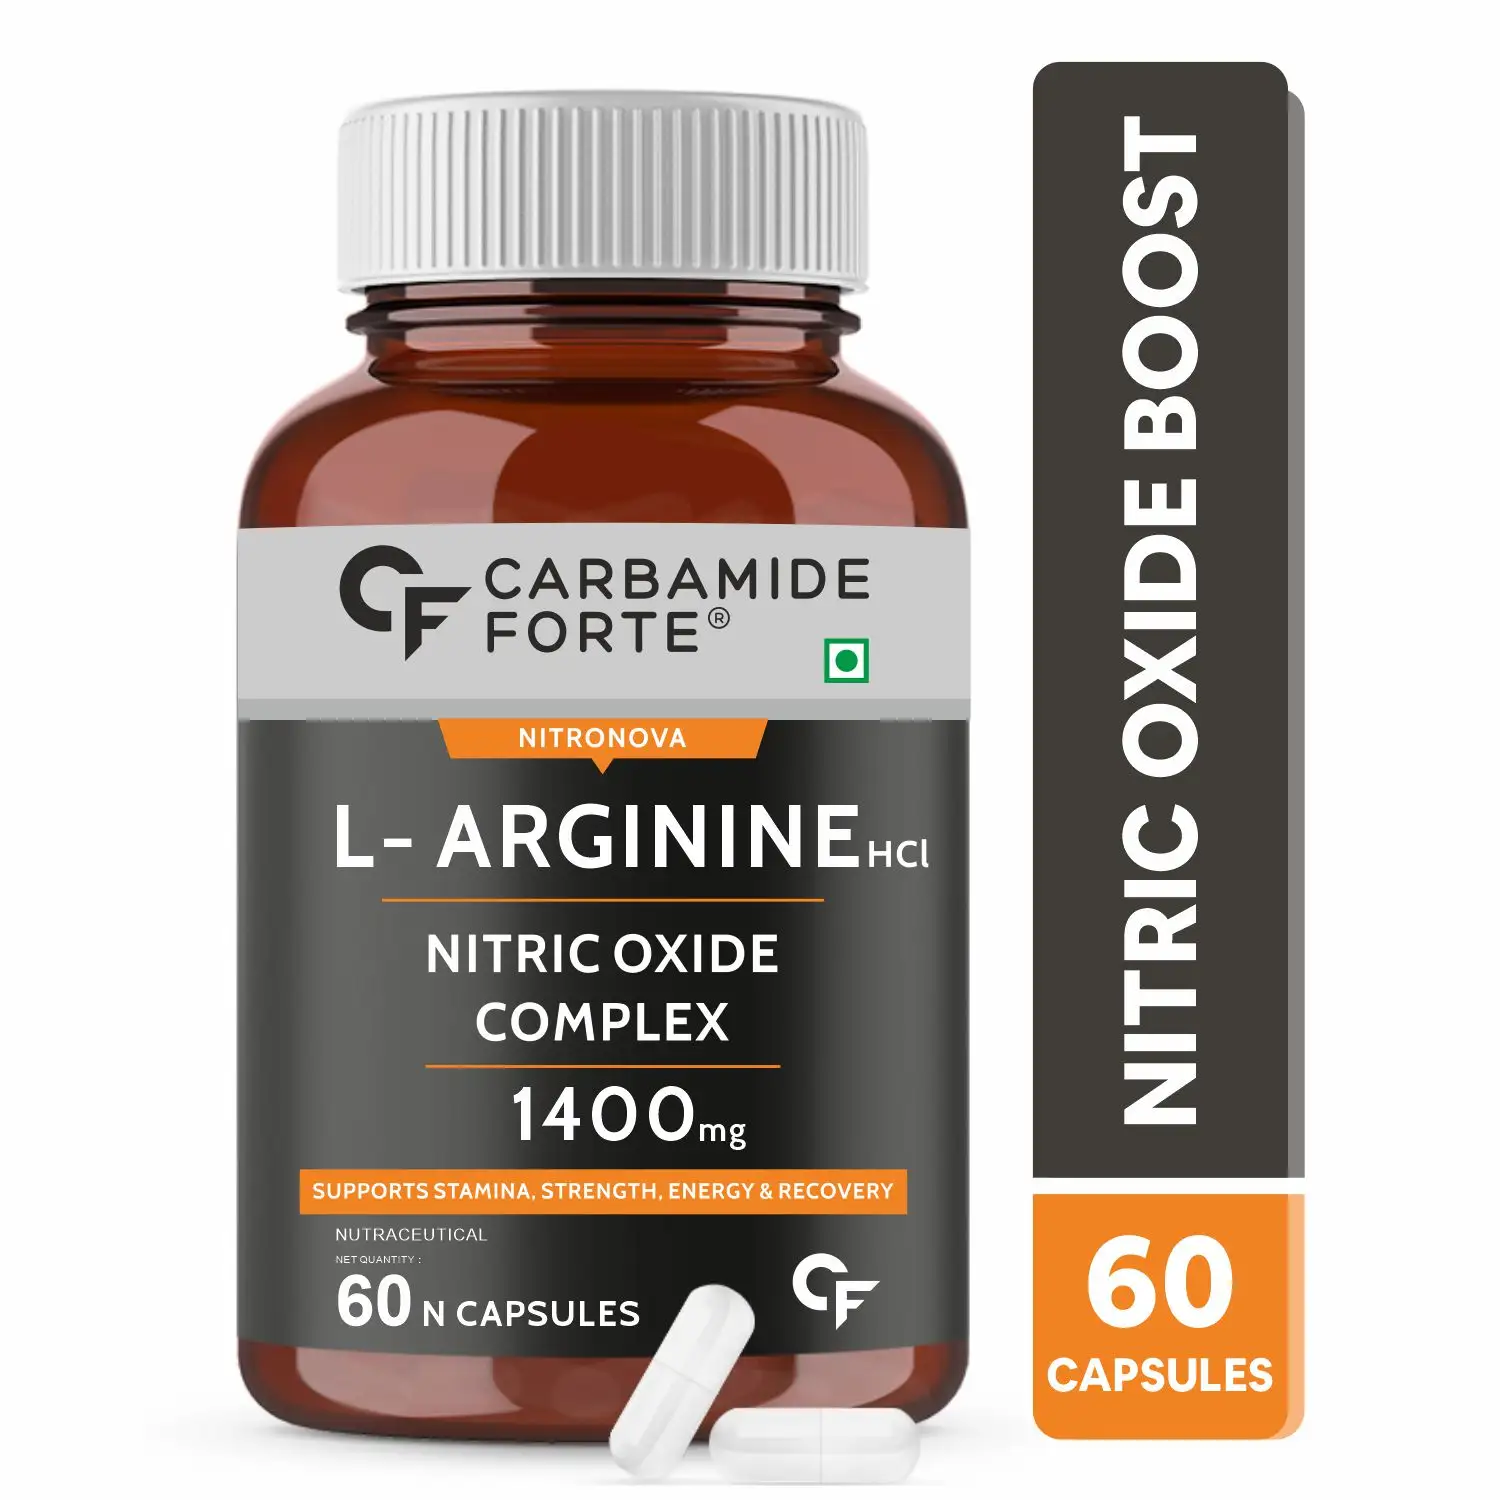 Suplemento potenciador de óxido nítrico, 1400mg, con l-arginina HCL, AAKG, malato de citrulina L, extracto de raíz de Beet y cafeina